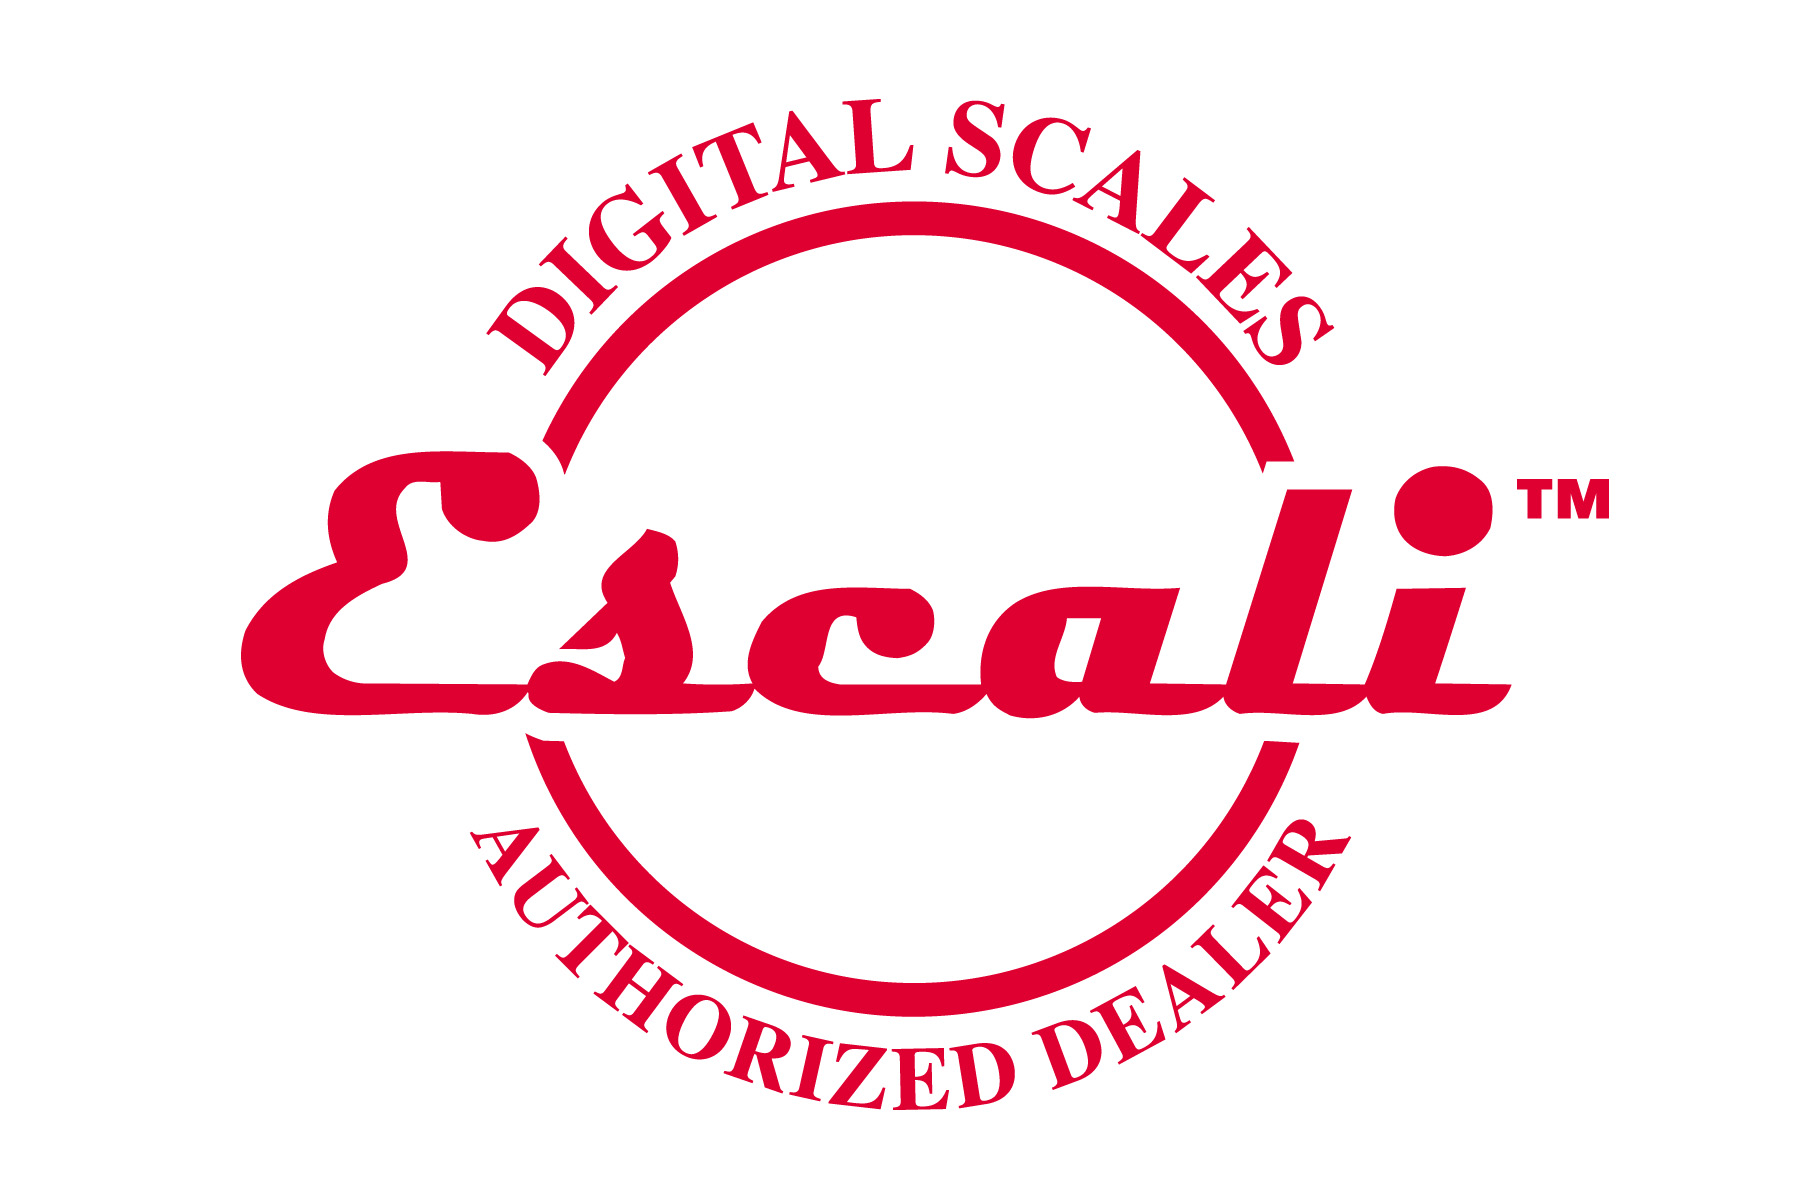 Escali Digital Pocket Scale, Measuring & Testing: Great Fermentations